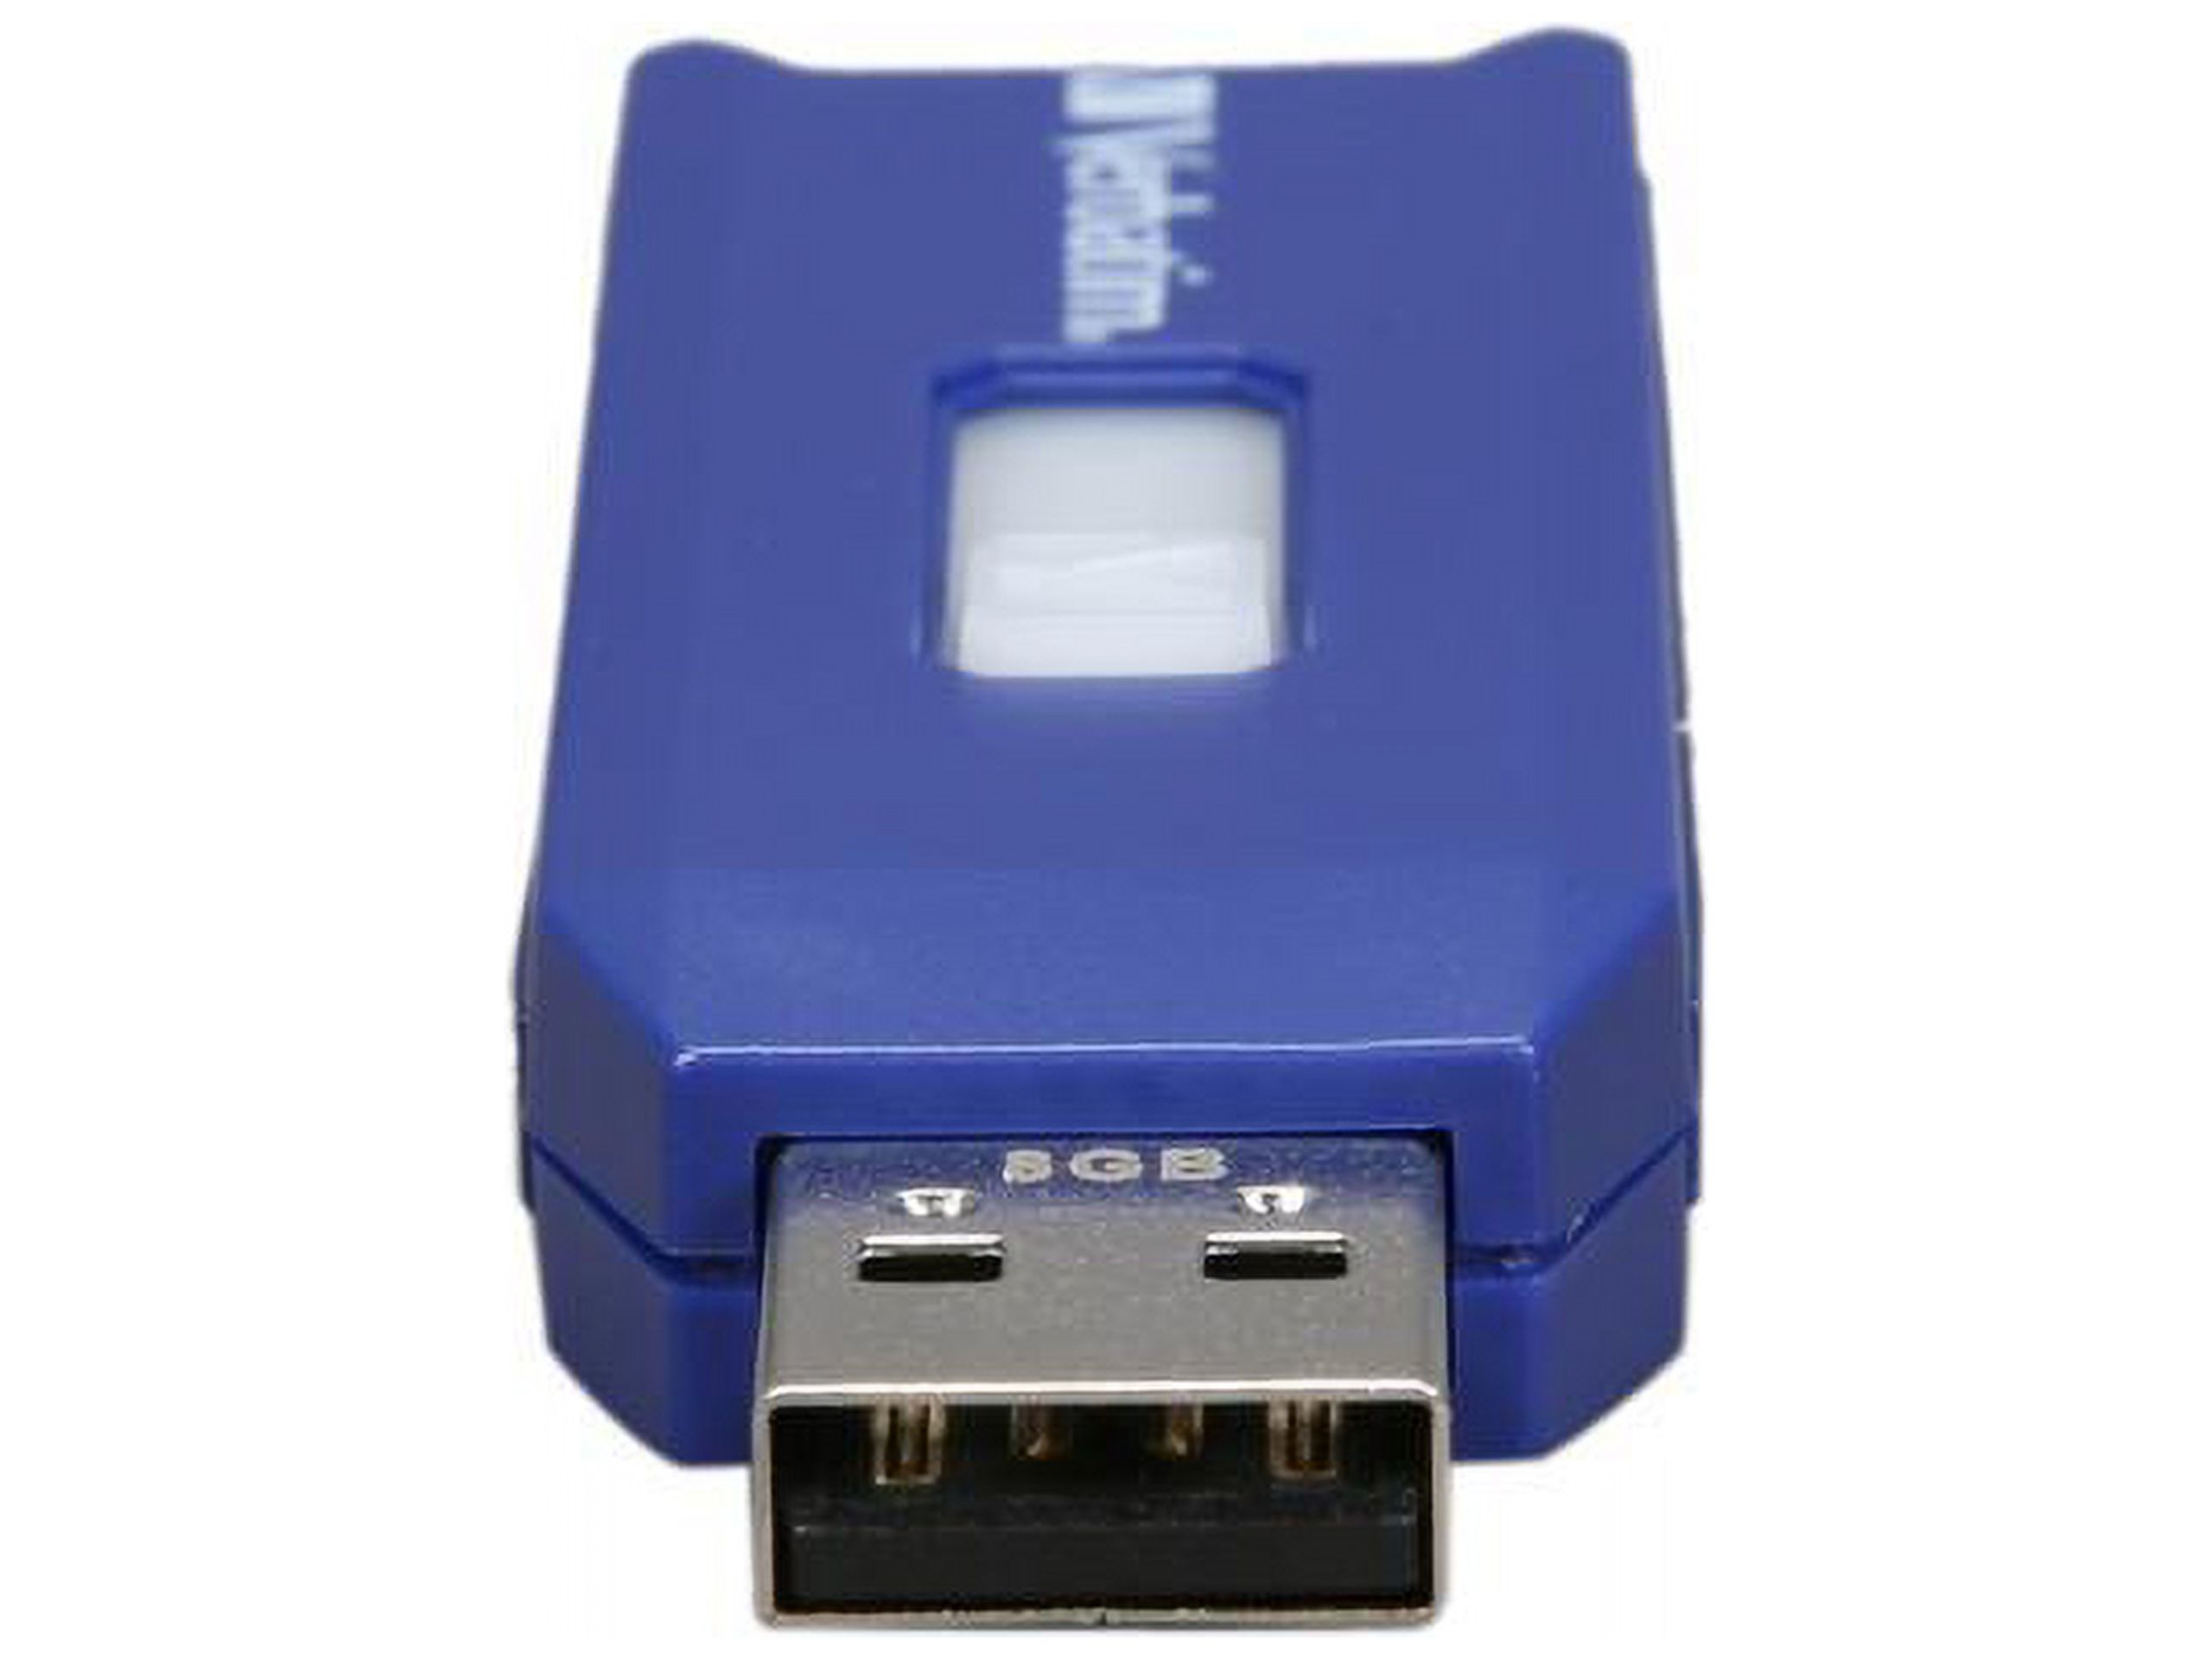 Verbatim Smart 8GB USB 2.0 Flash Drive Model 97088 - image 3 of 4